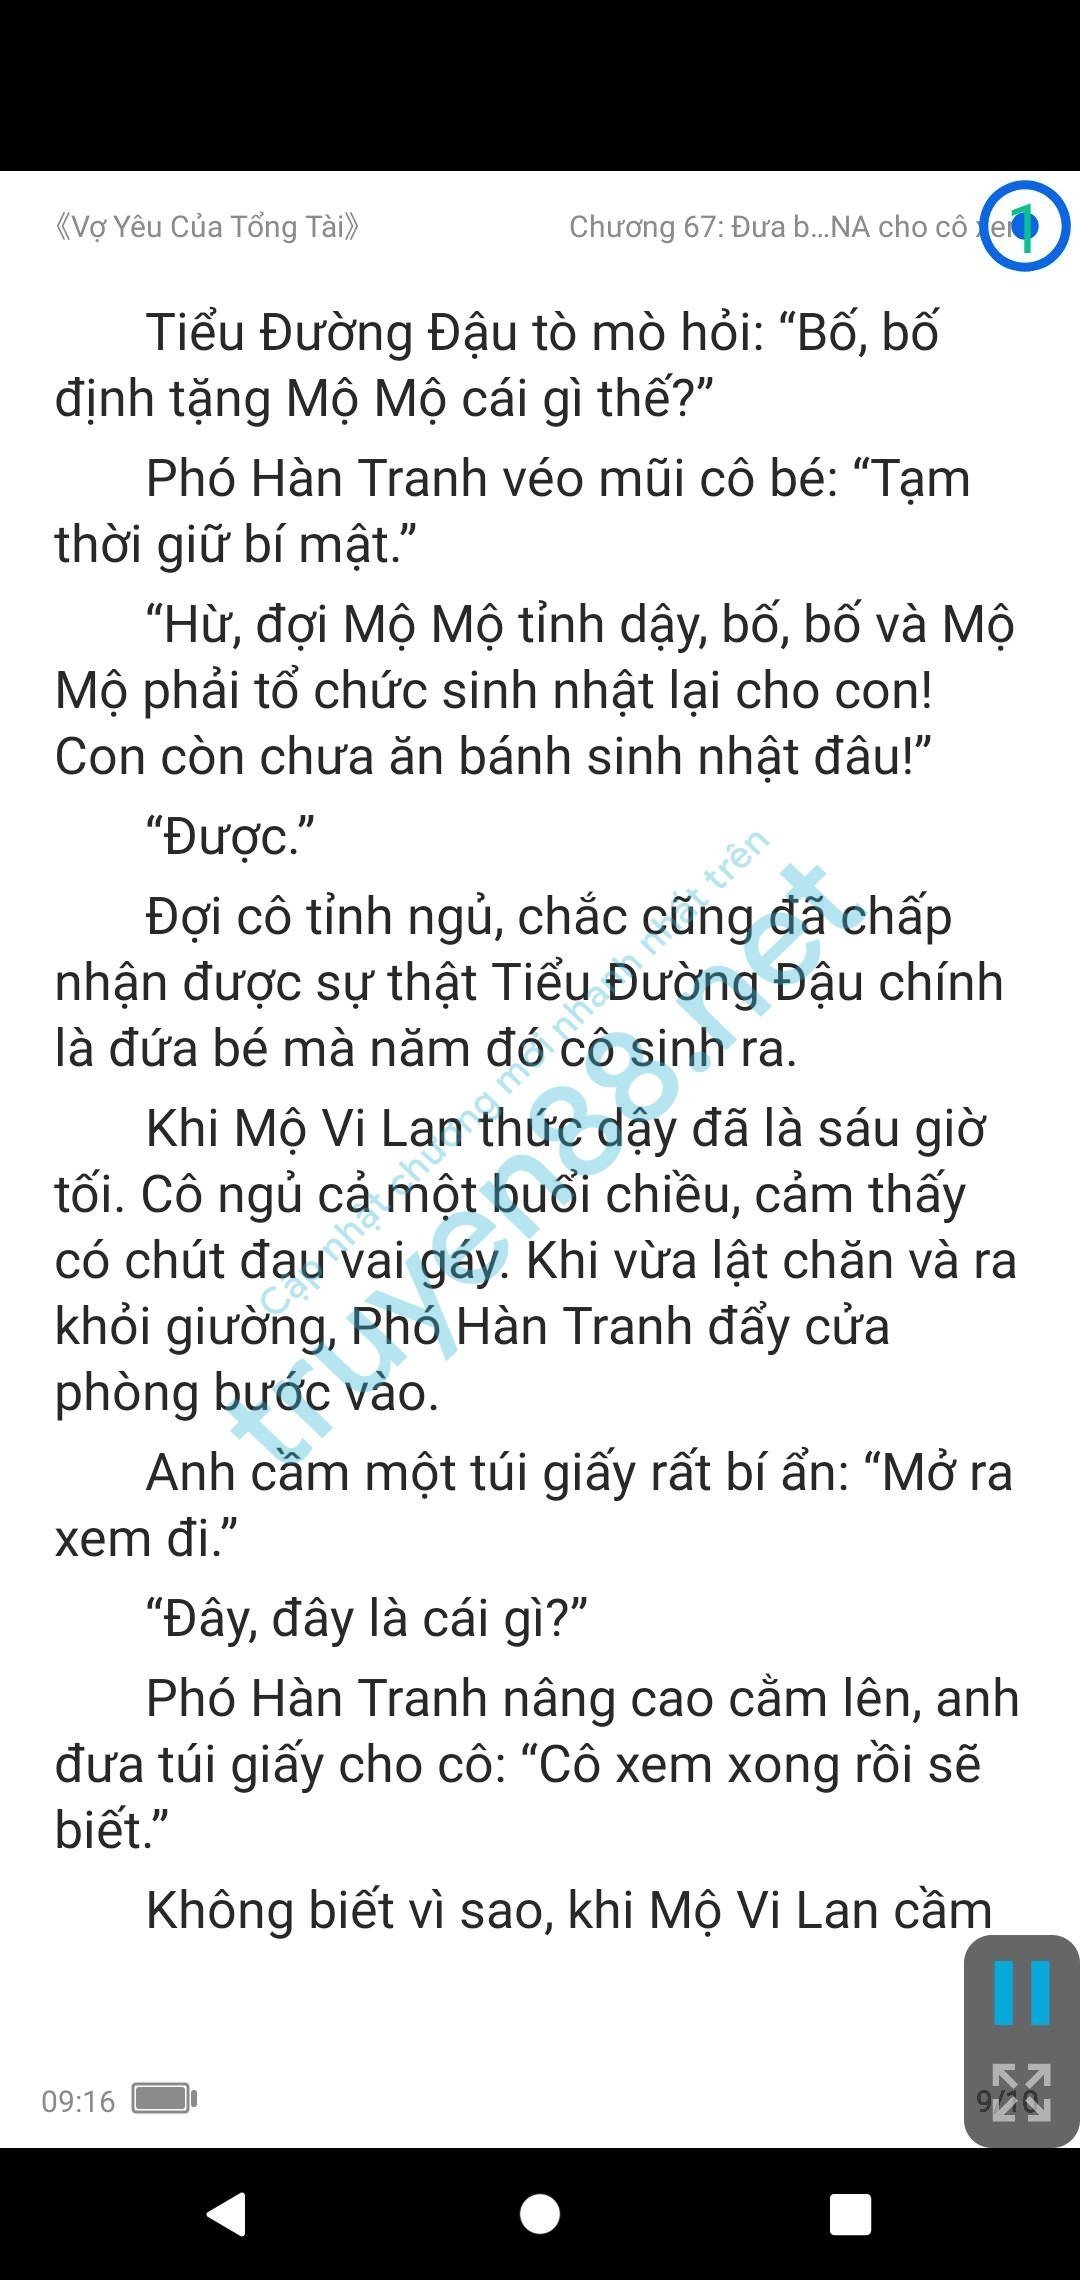 vo-yeu-cua-tong-tai-mo-vi-lan--pho-han-tranh-67-1